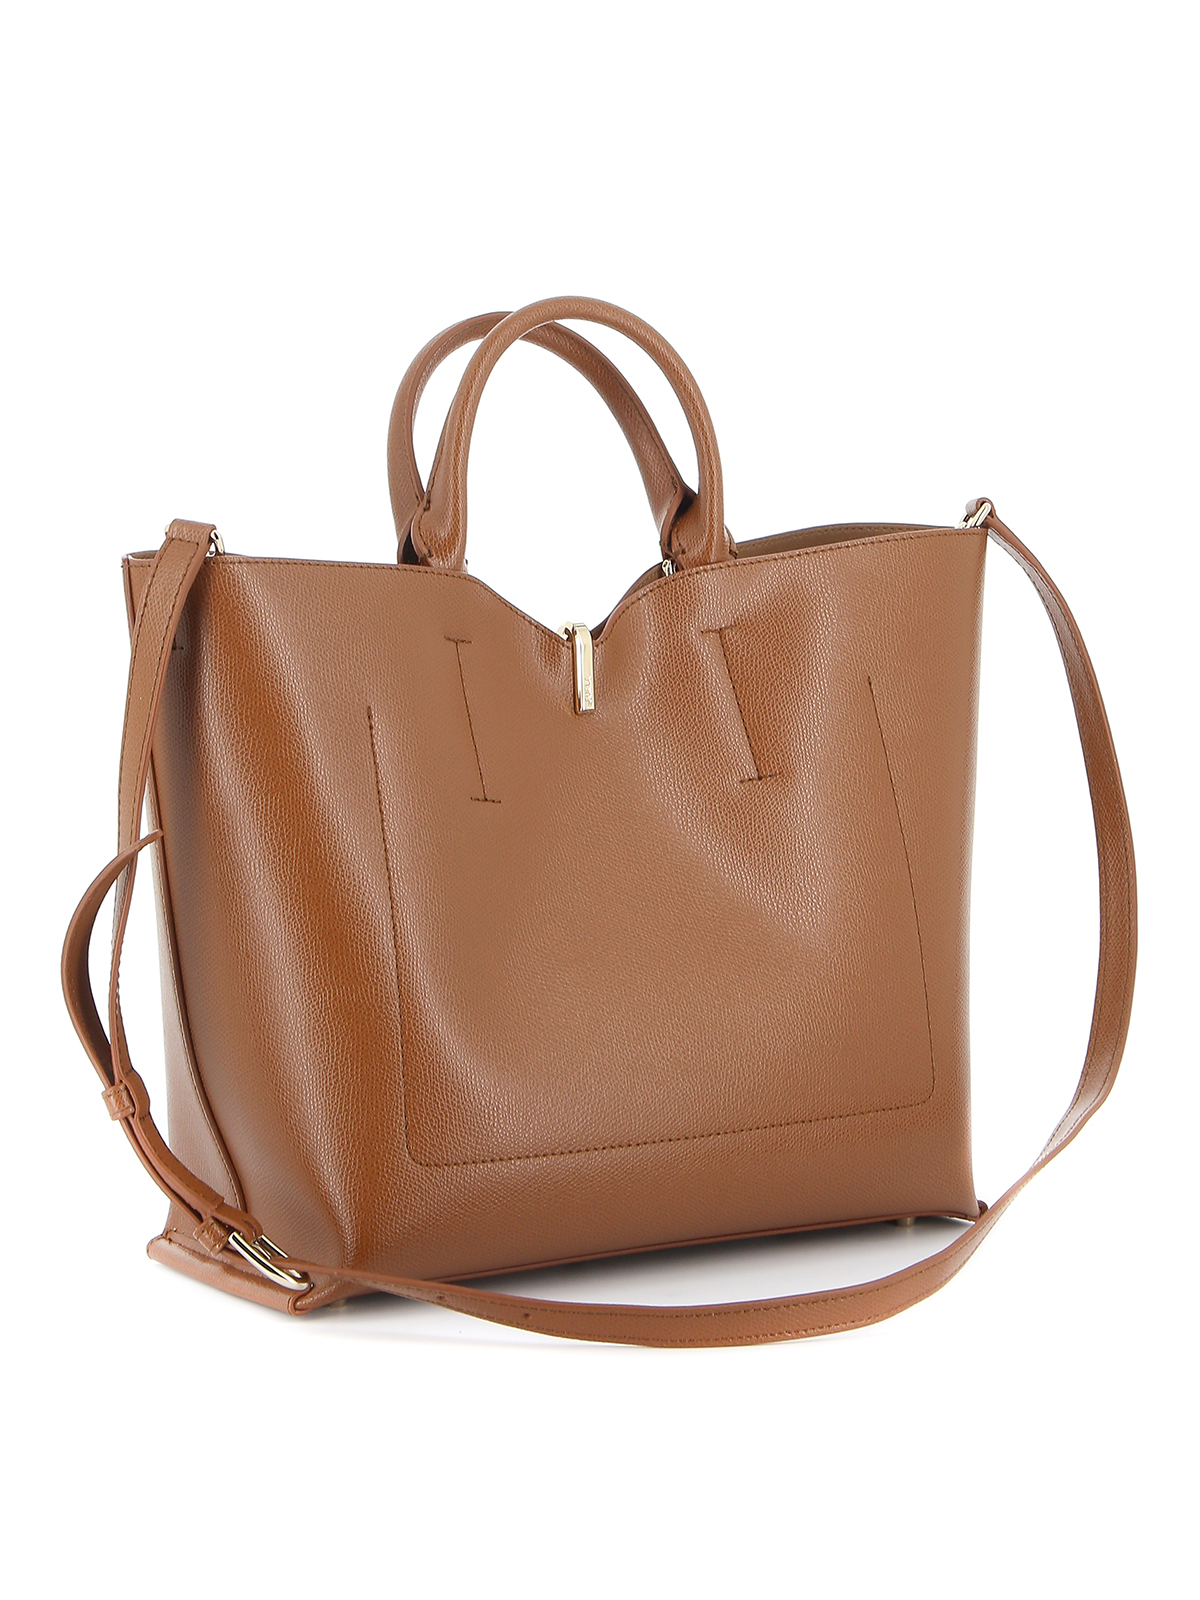 Totes bags Furla - Ribbon medium tote - 1055914 | Shop online at iKRIX